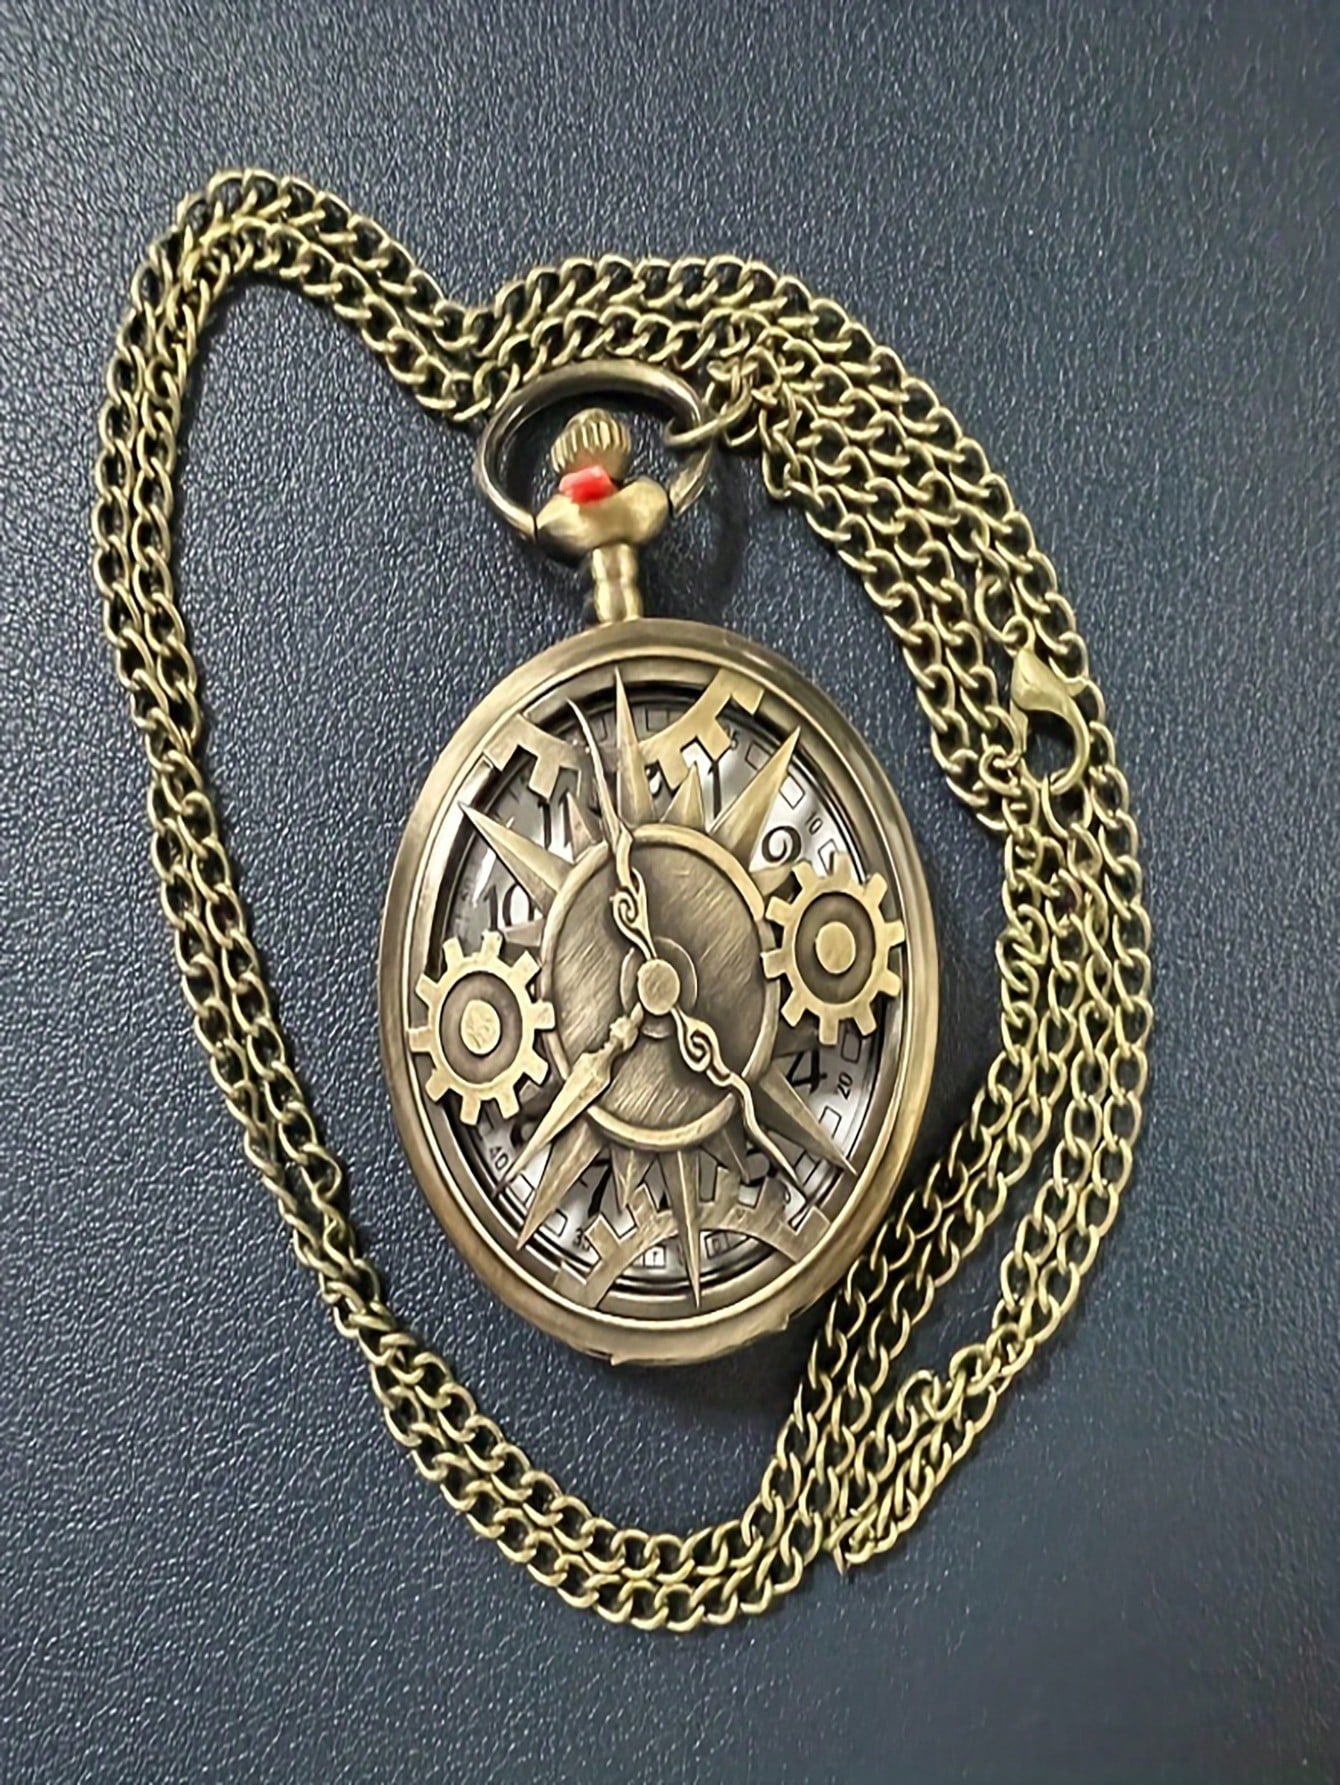 1pc Antique Steampunk Bronze Hollow Gear Movement Quartz Pocket Watch Pendant Gift With Chain Pocket